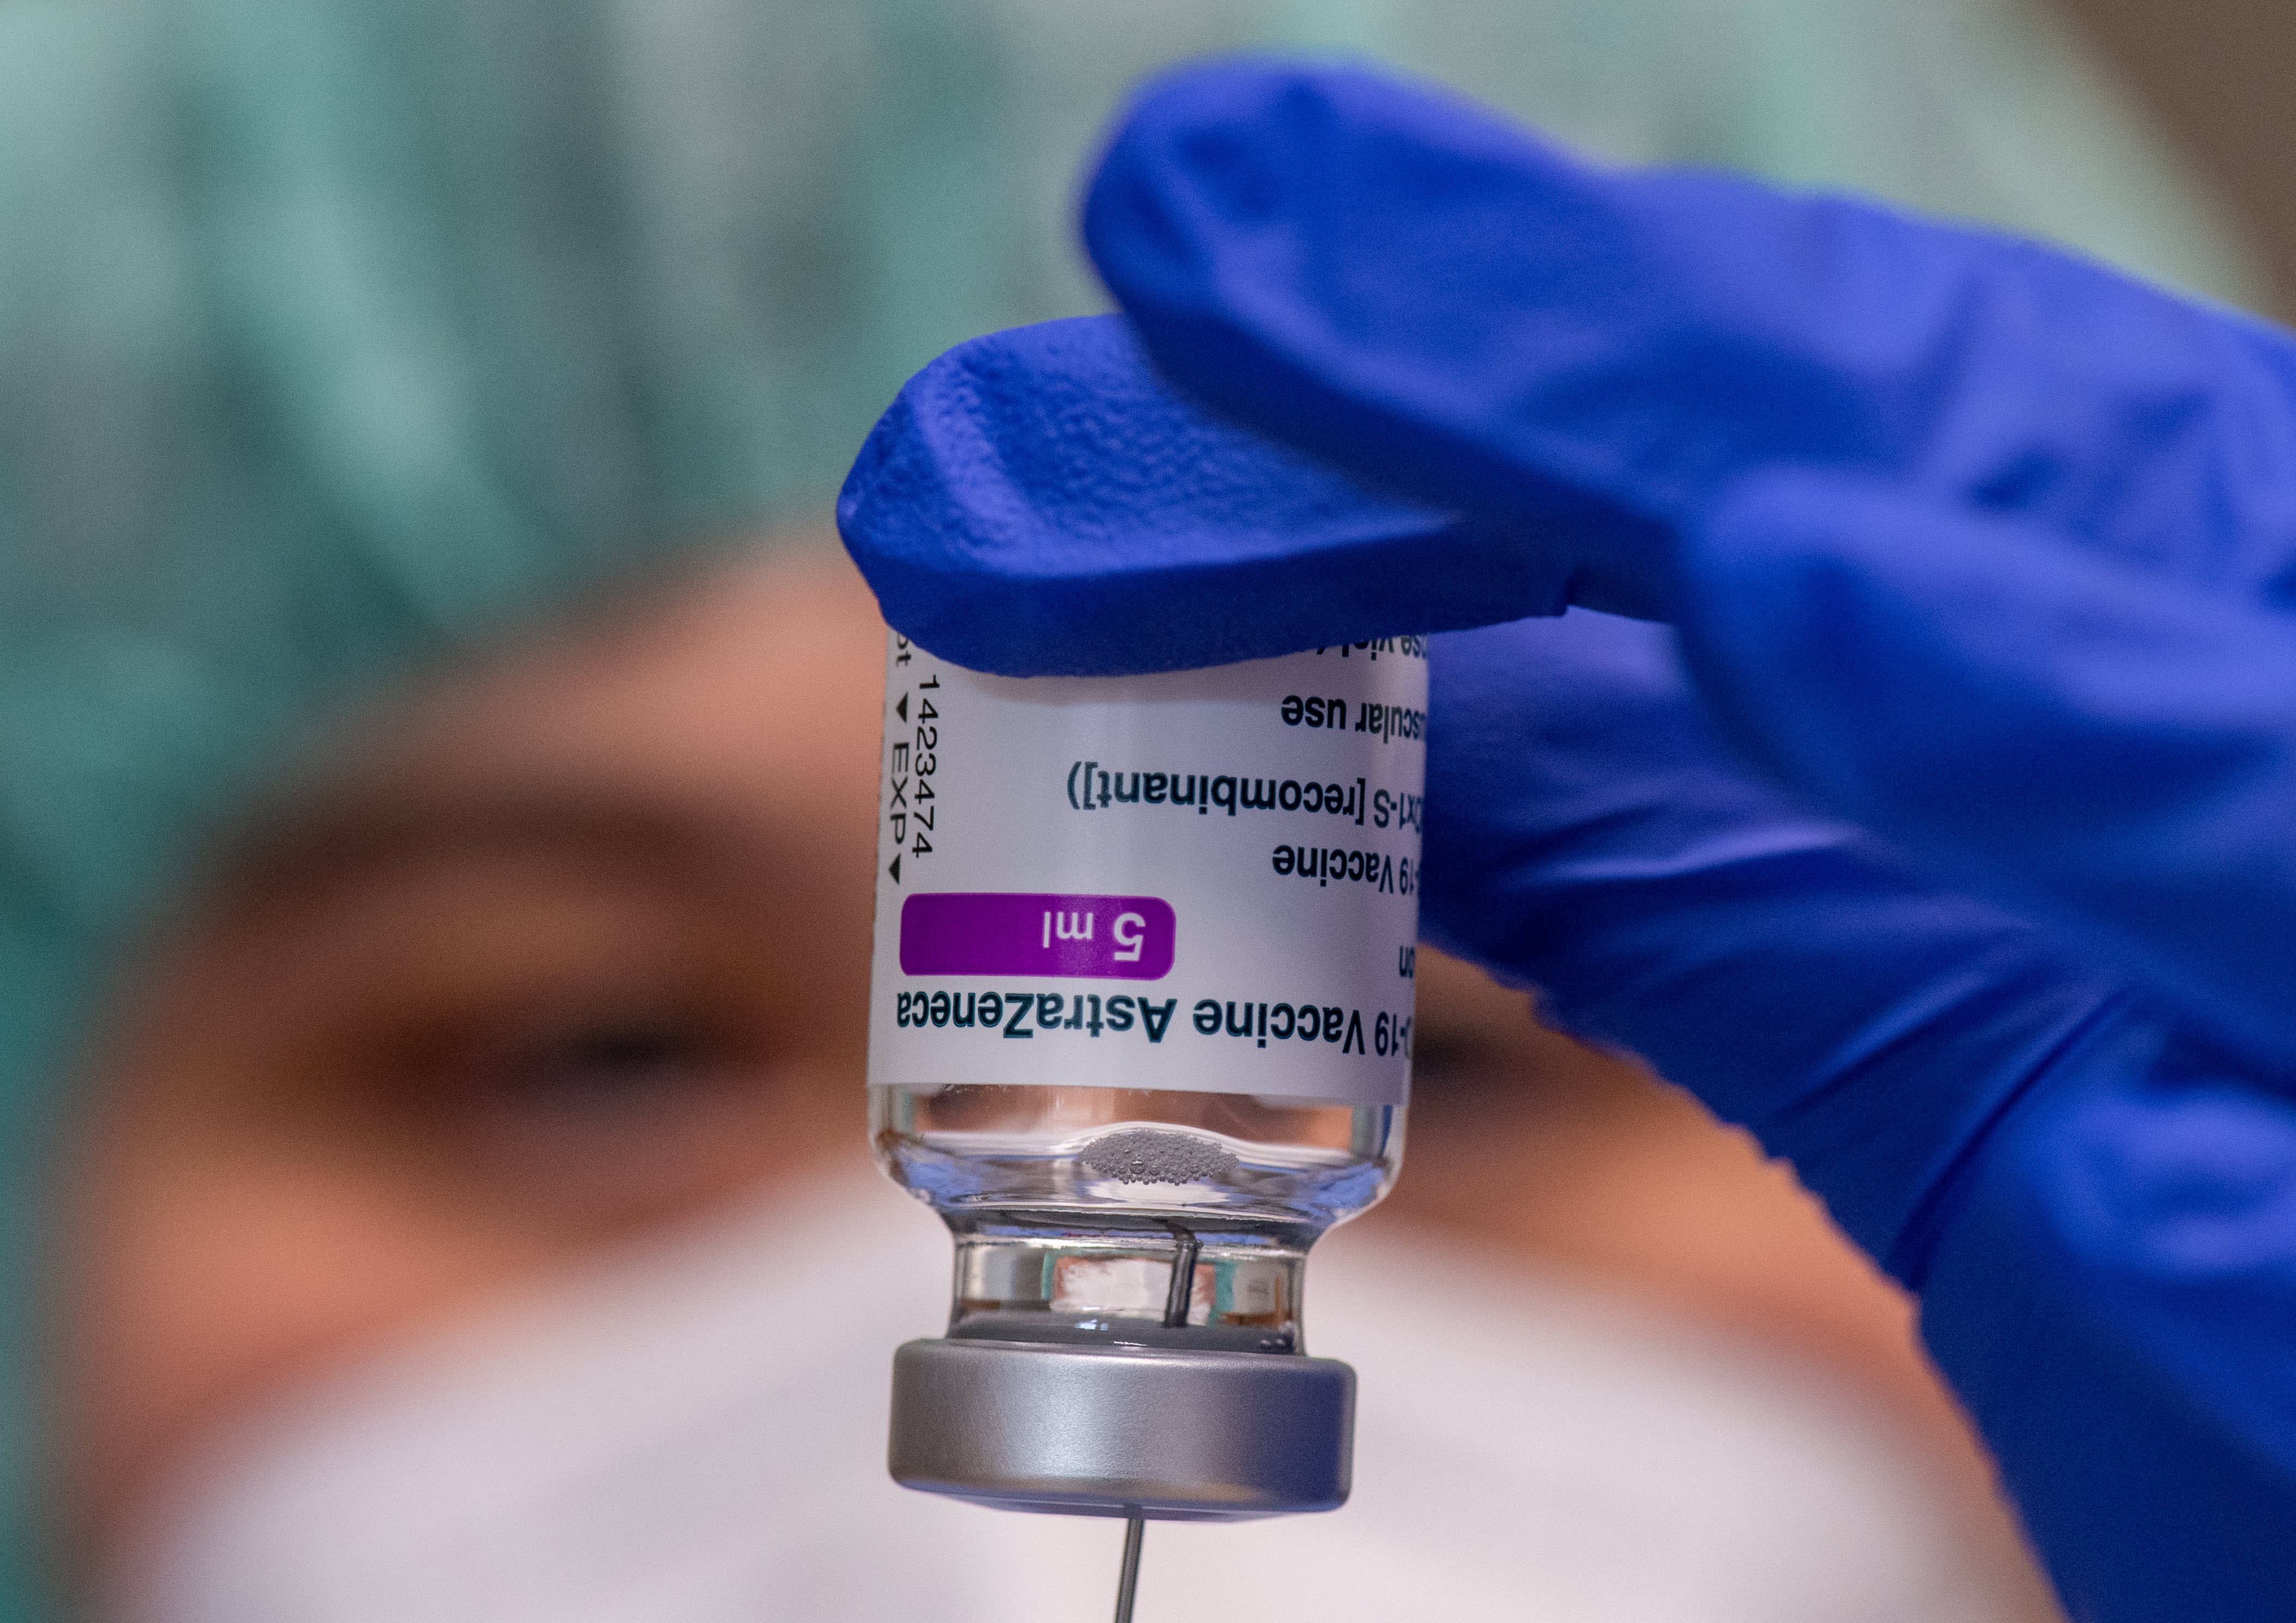 U.S. health agency casts doubt over AstraZeneca's Covid vaccine trial data